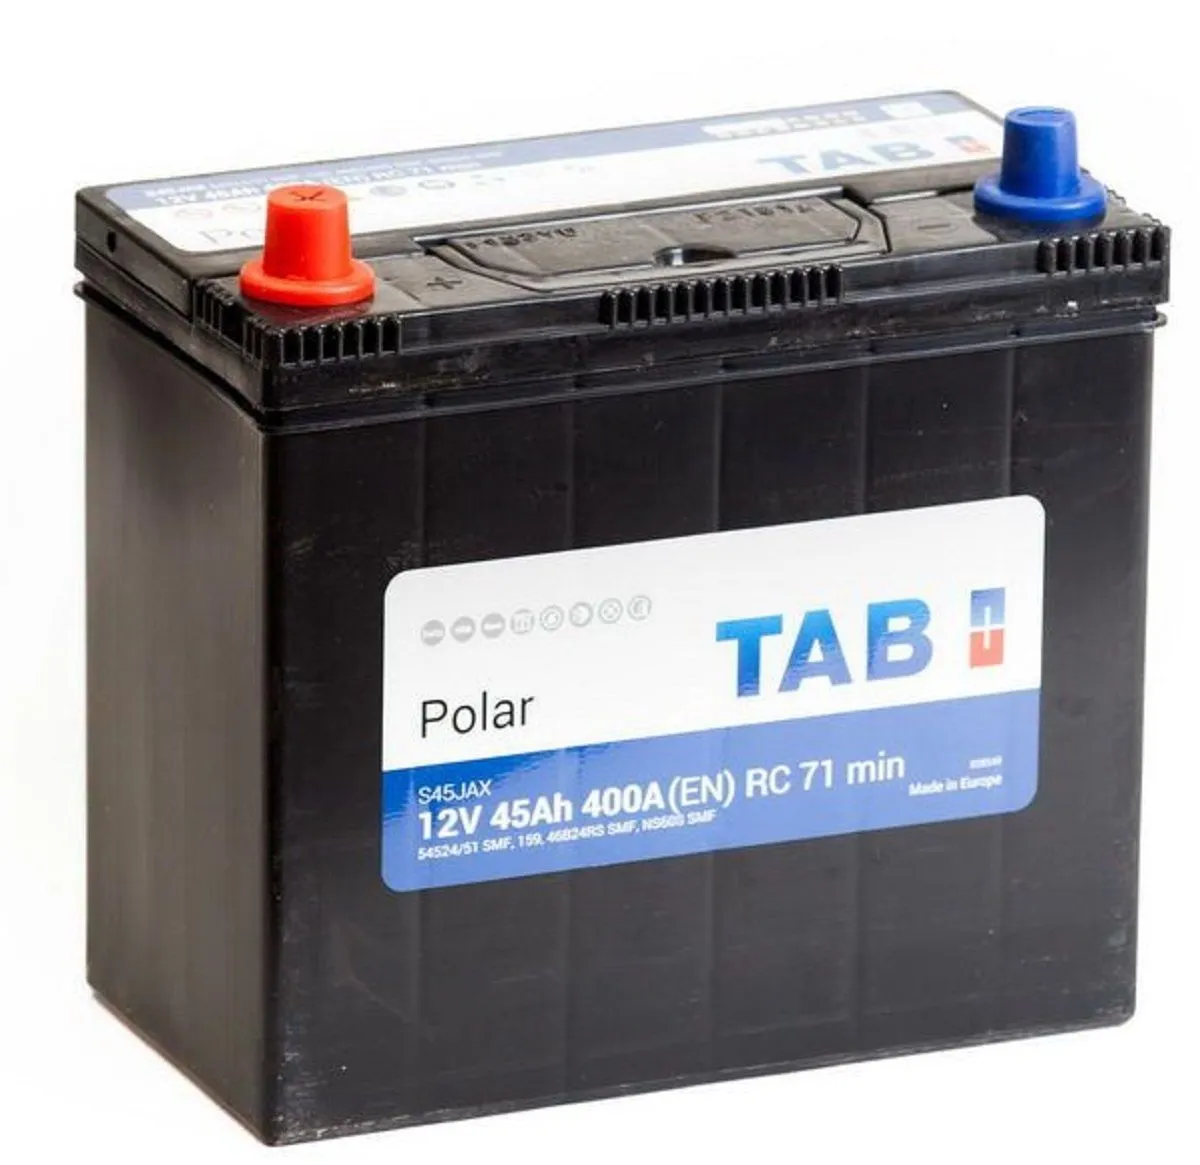 аккумулятор TAB Polar  6СТ-45.1 (54524/51) яп ст/тонк.кл.с переходн.